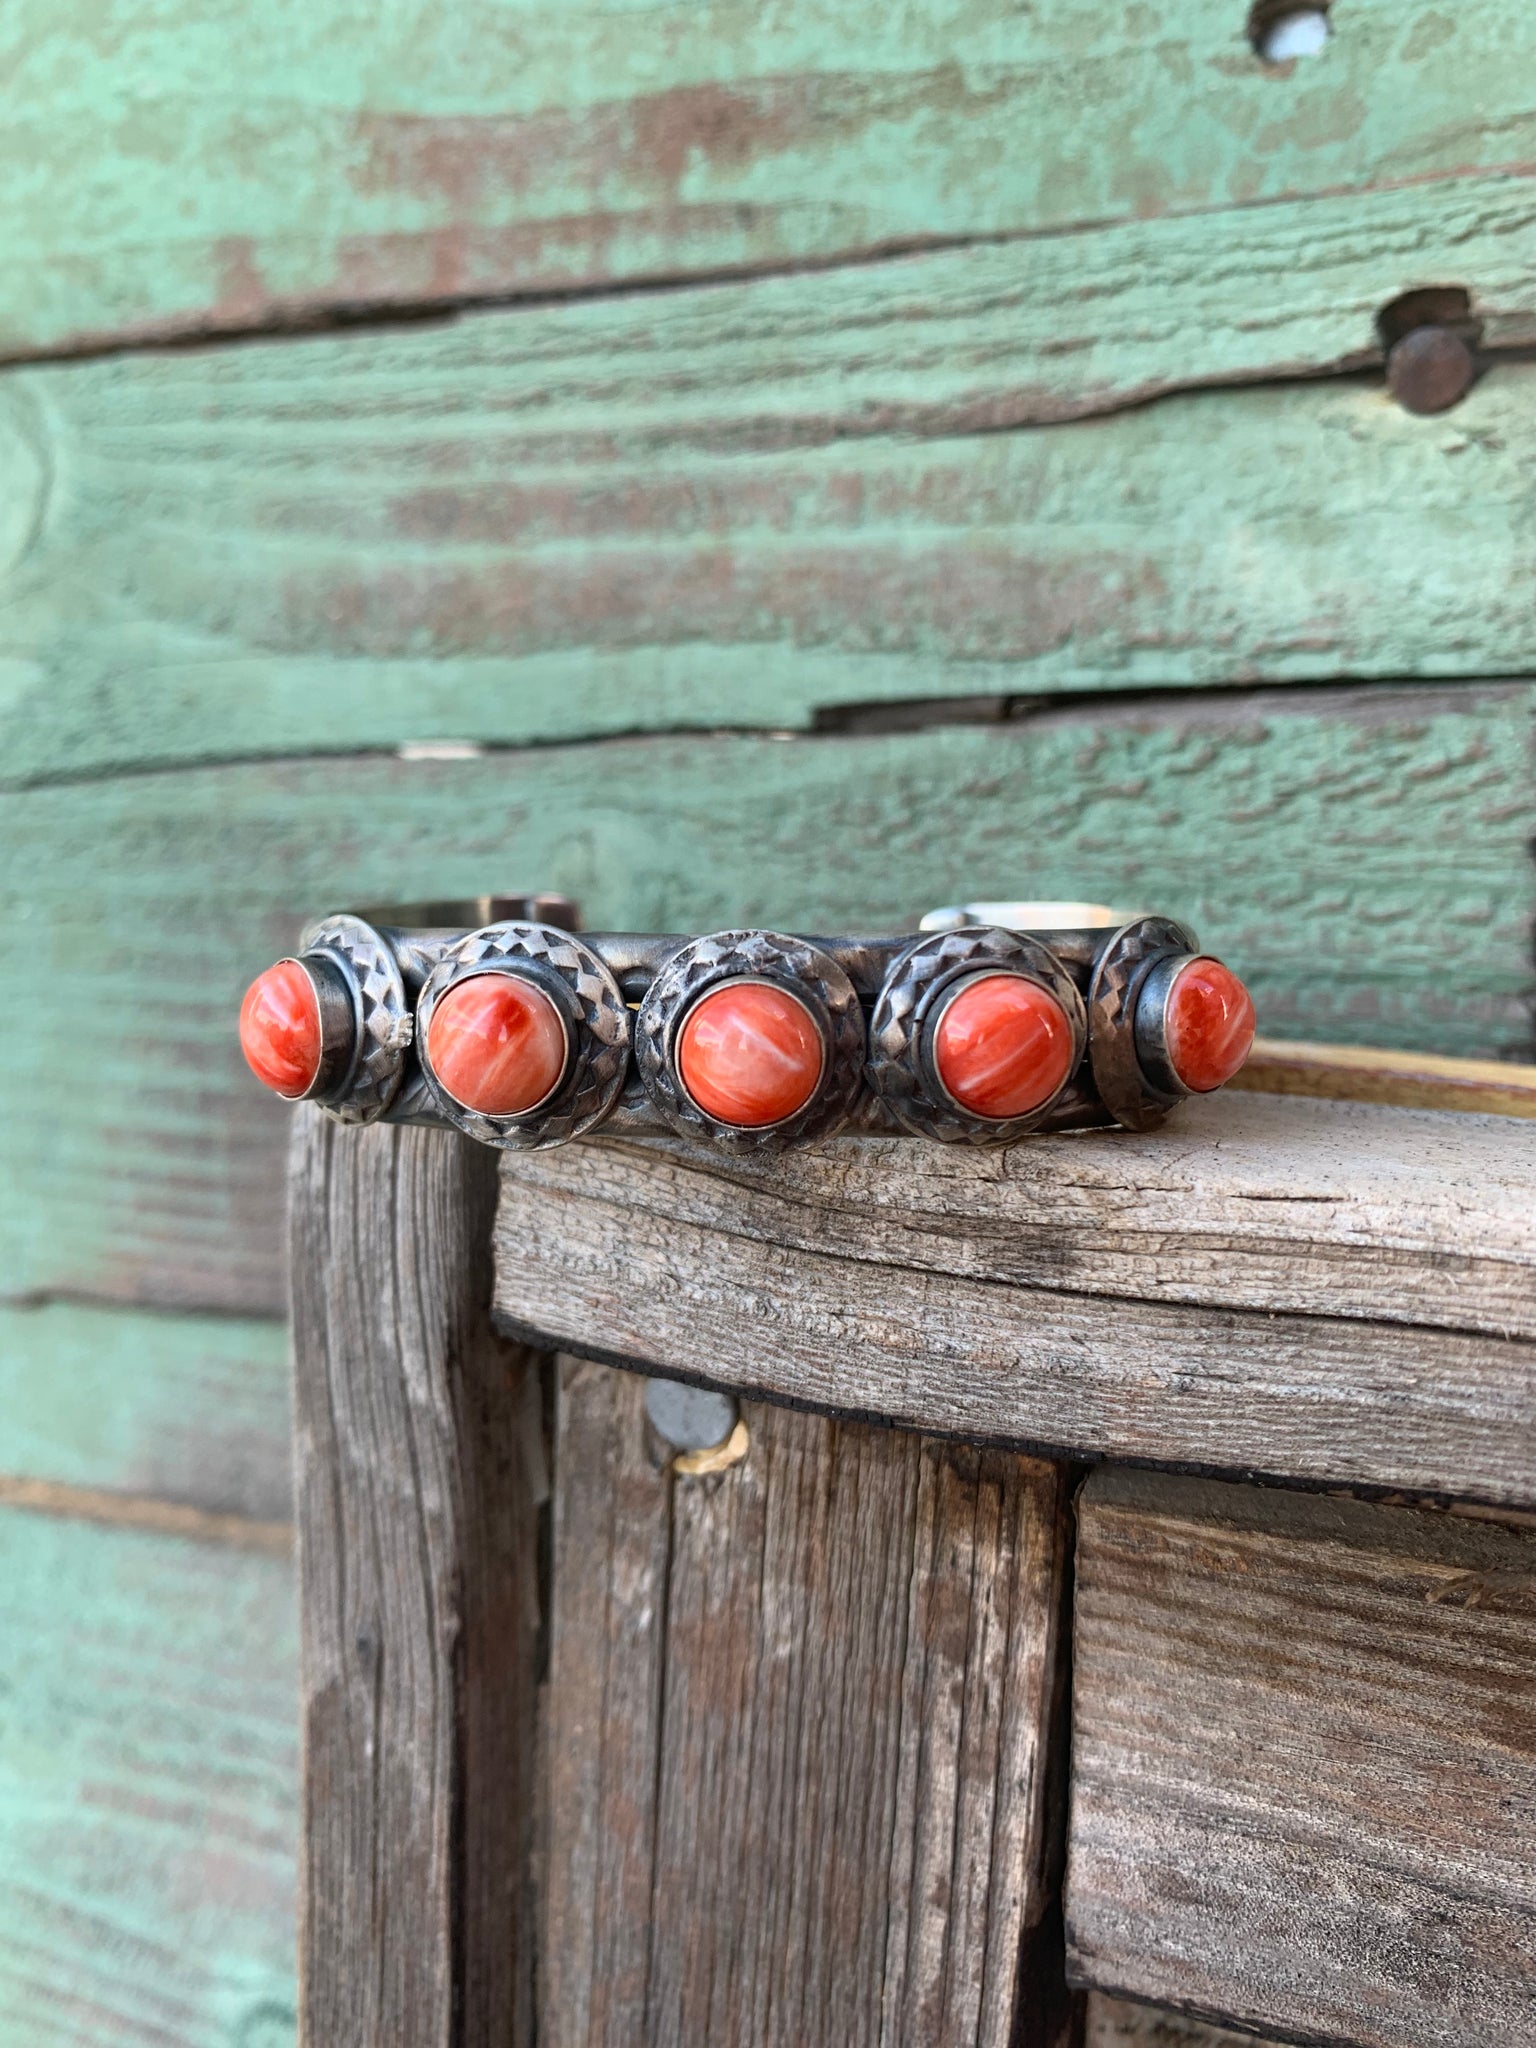 Red Shell cuff bracelet